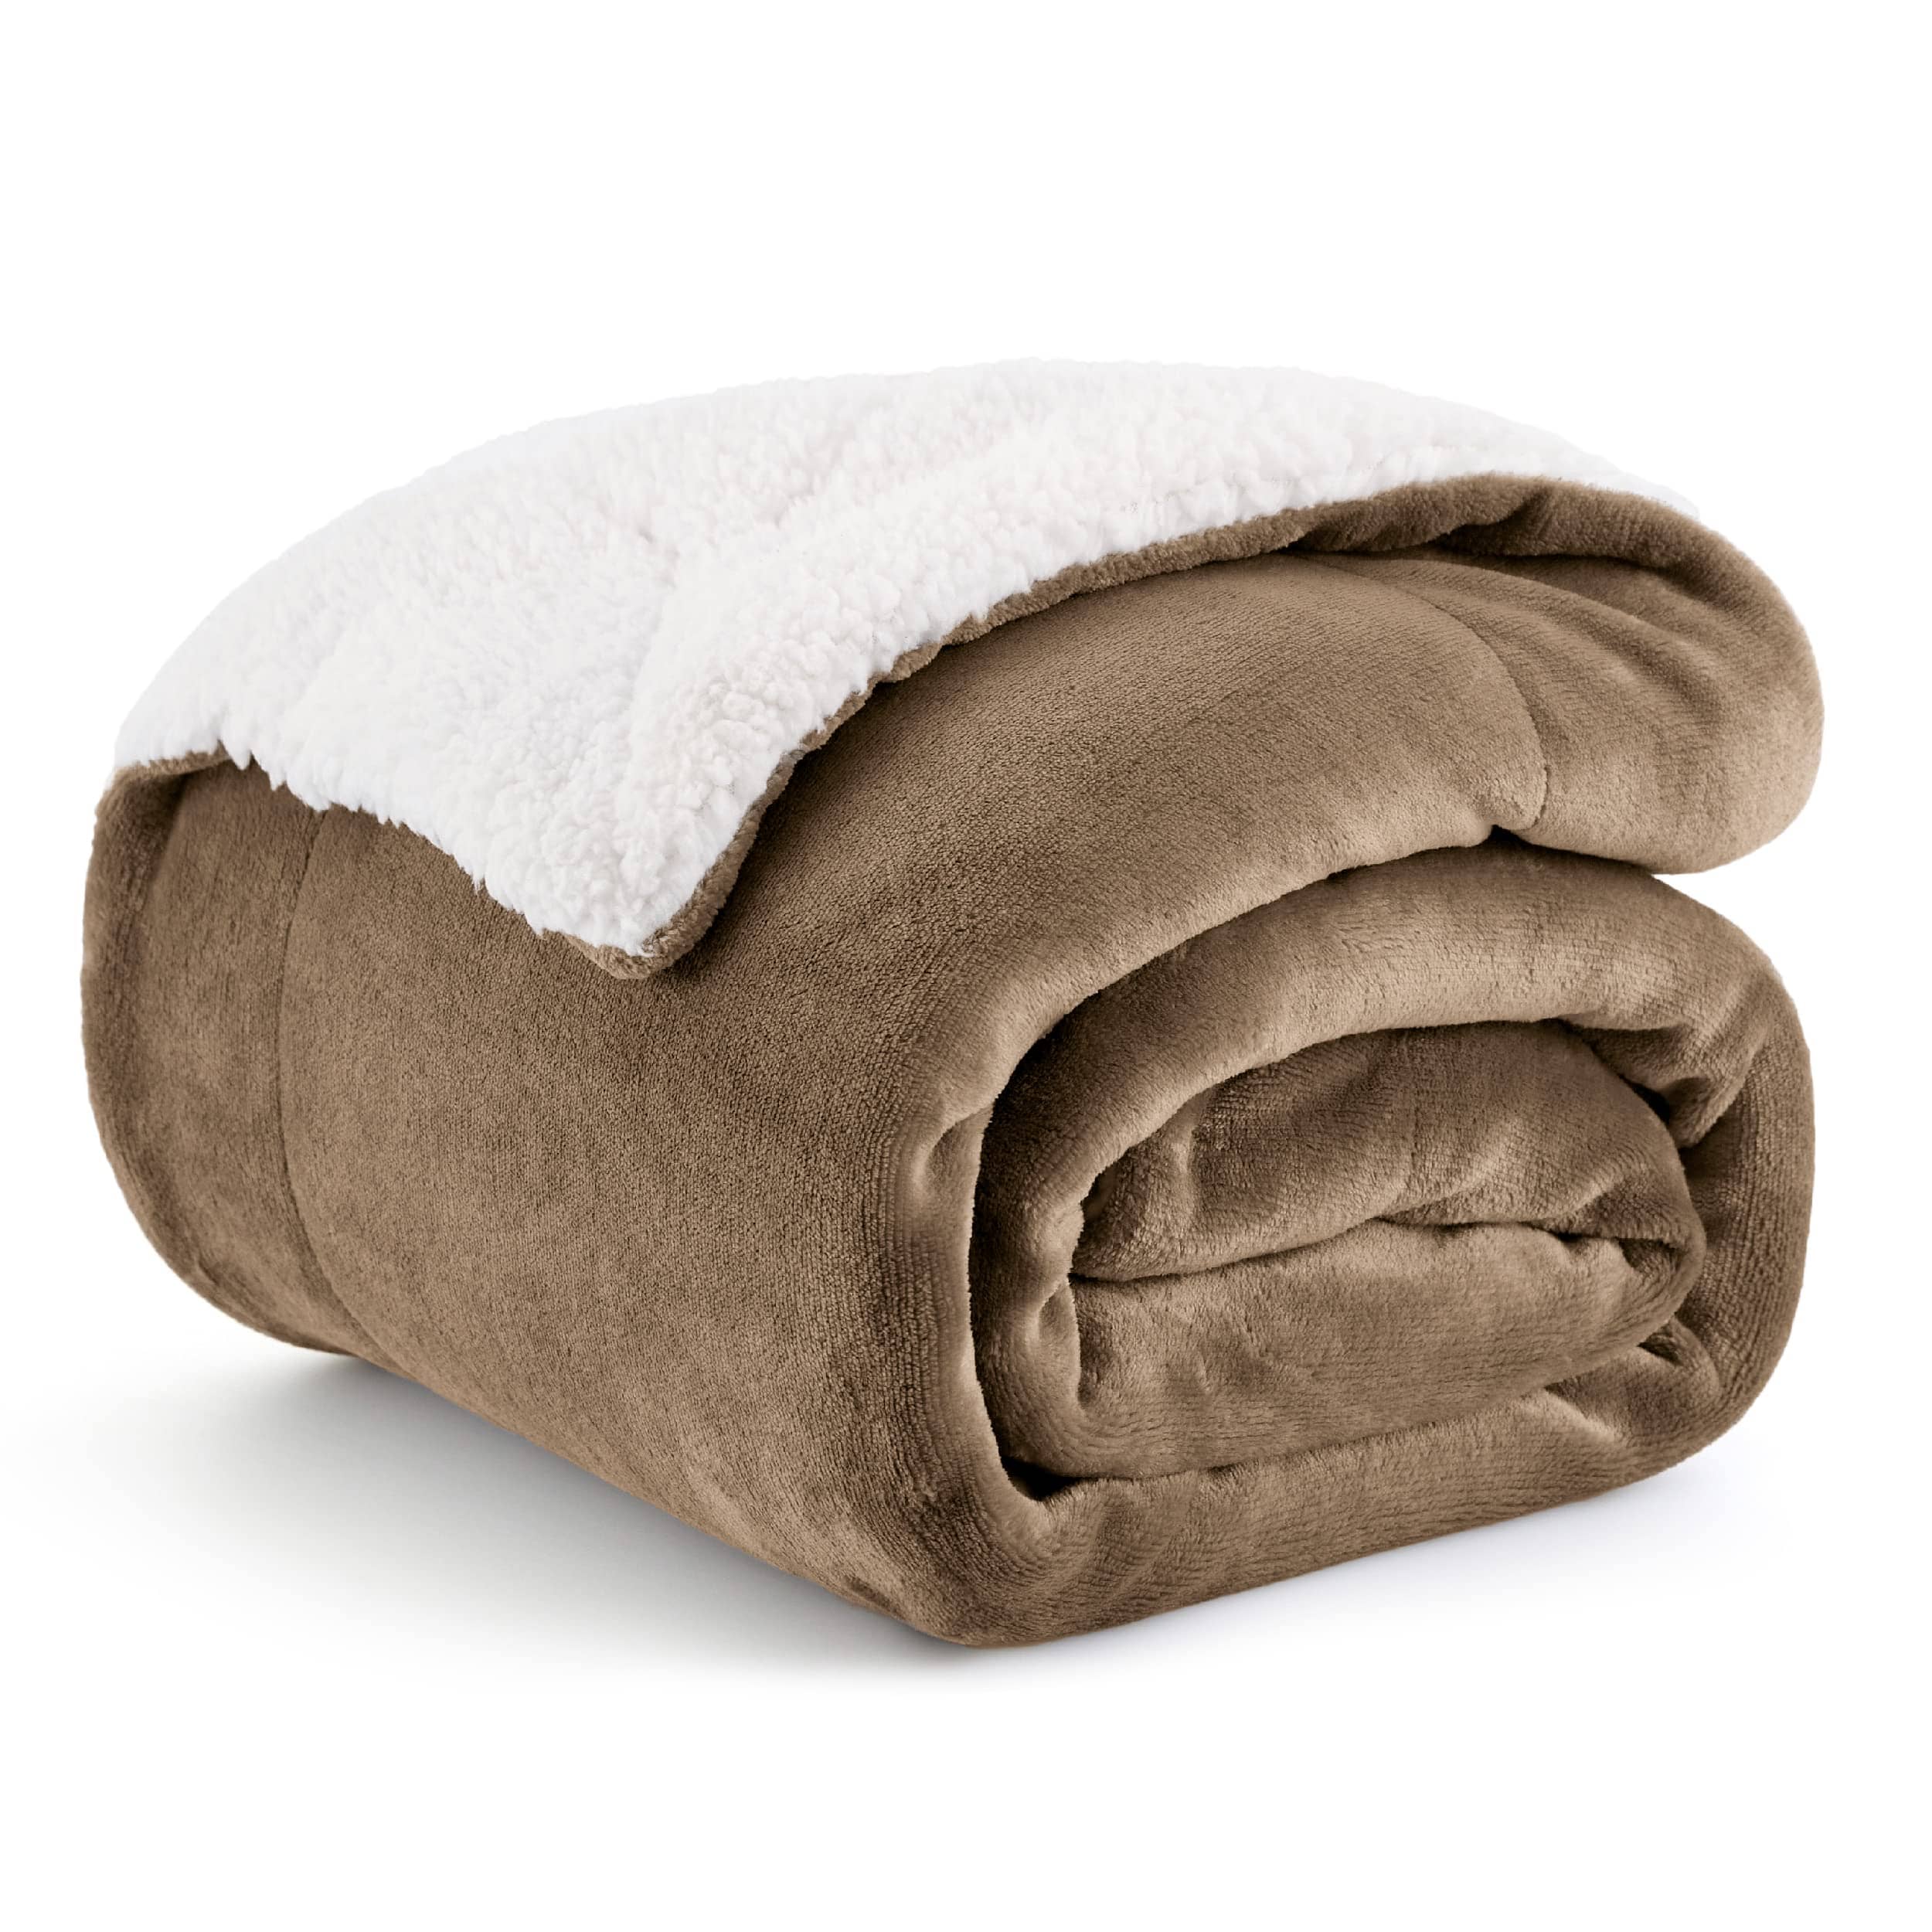 Utopia Bedding Camel Fleece Blanket Throw Size Lightweight Fuzzy